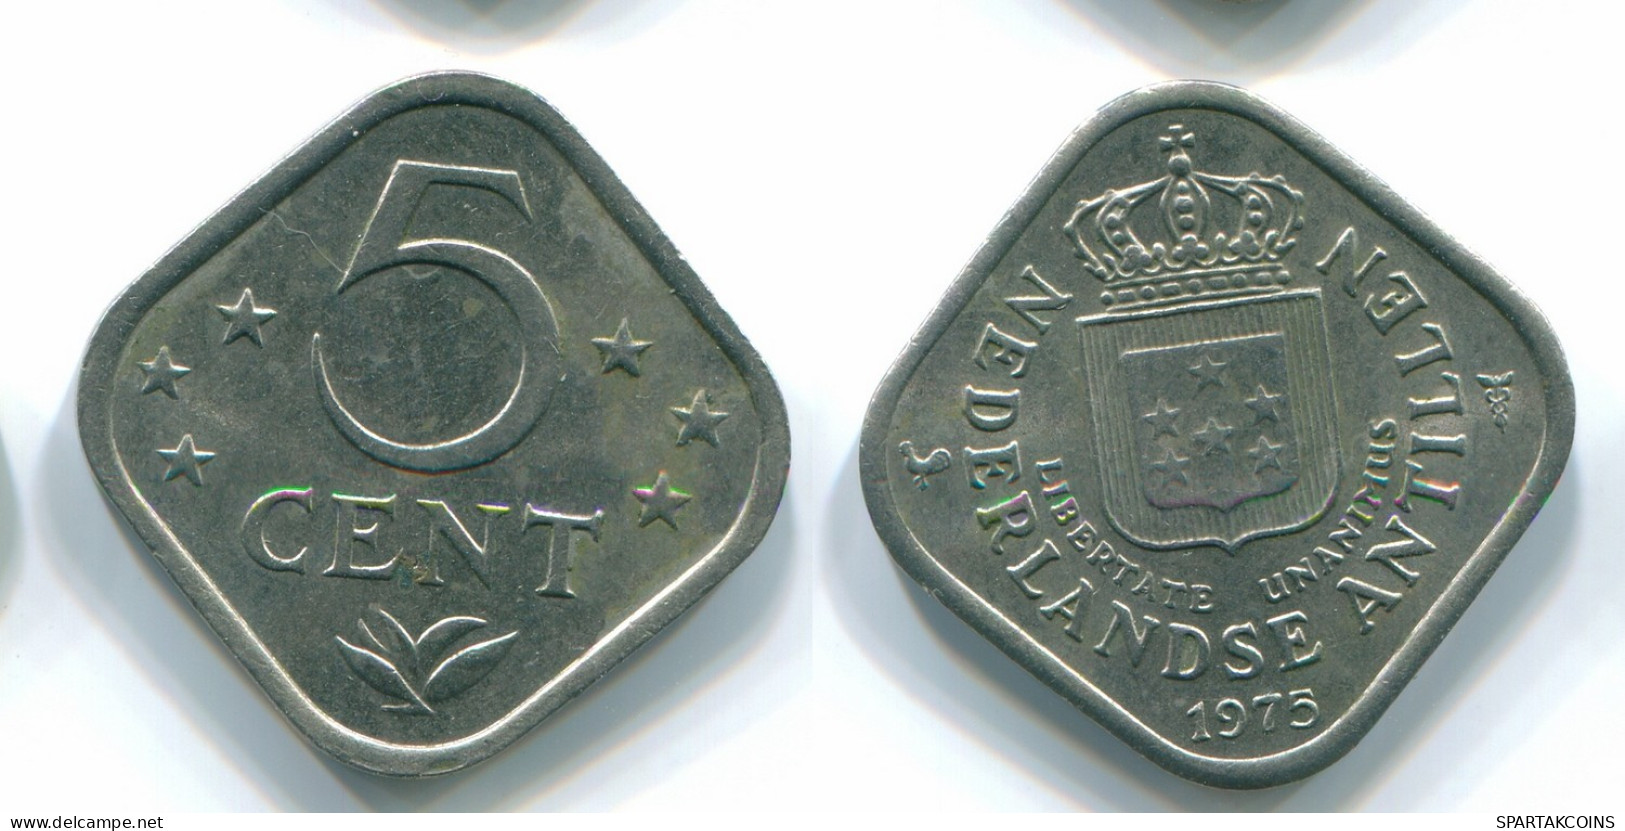 5 CENTS 1975 NETHERLANDS ANTILLES Nickel Colonial Coin #S12231.U.A - Antilles Néerlandaises